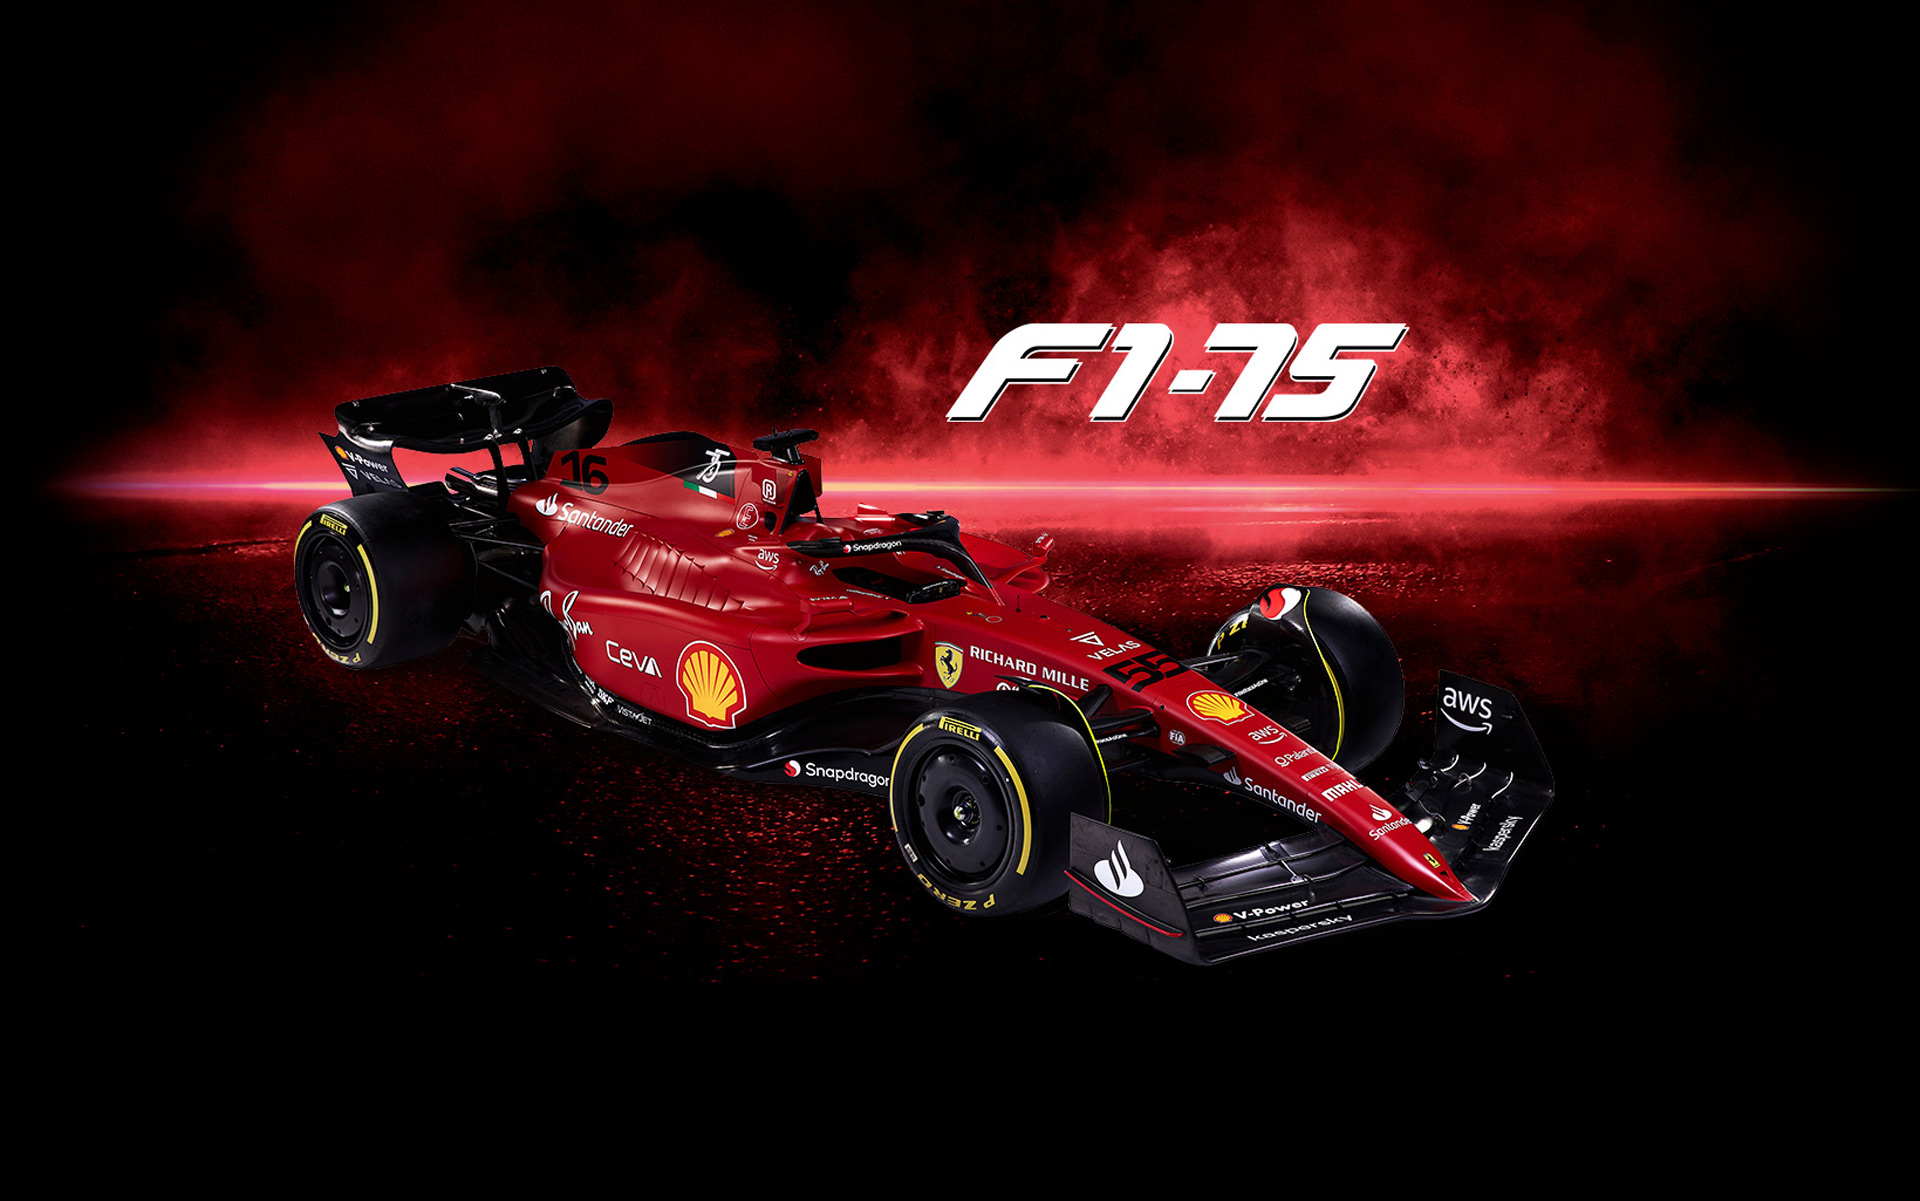 2022 Ferrari F175 Formula One race car makes debut